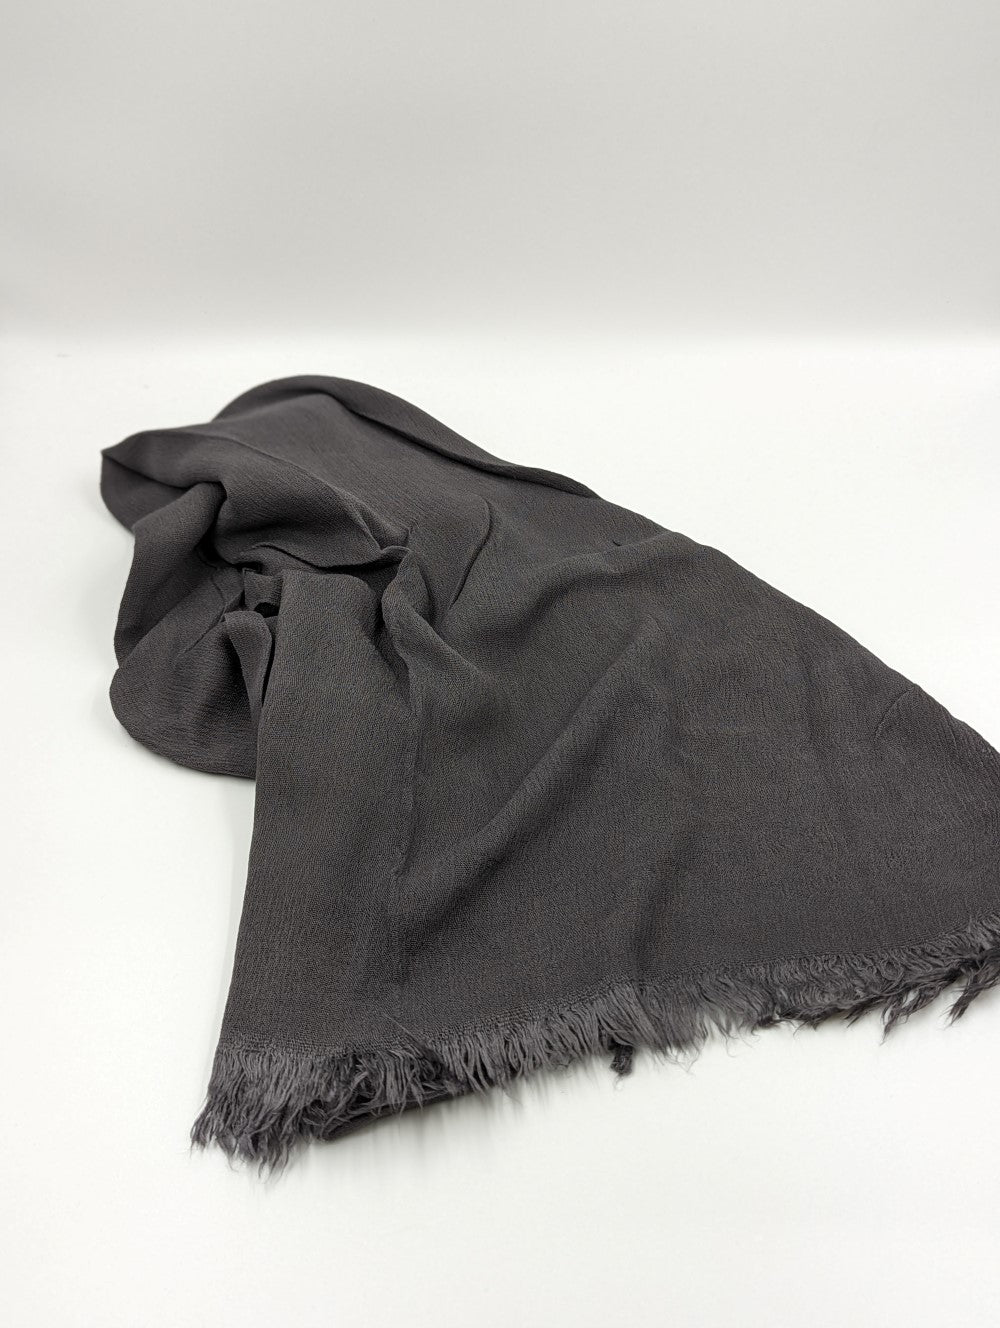 Linen crush scarf for summer